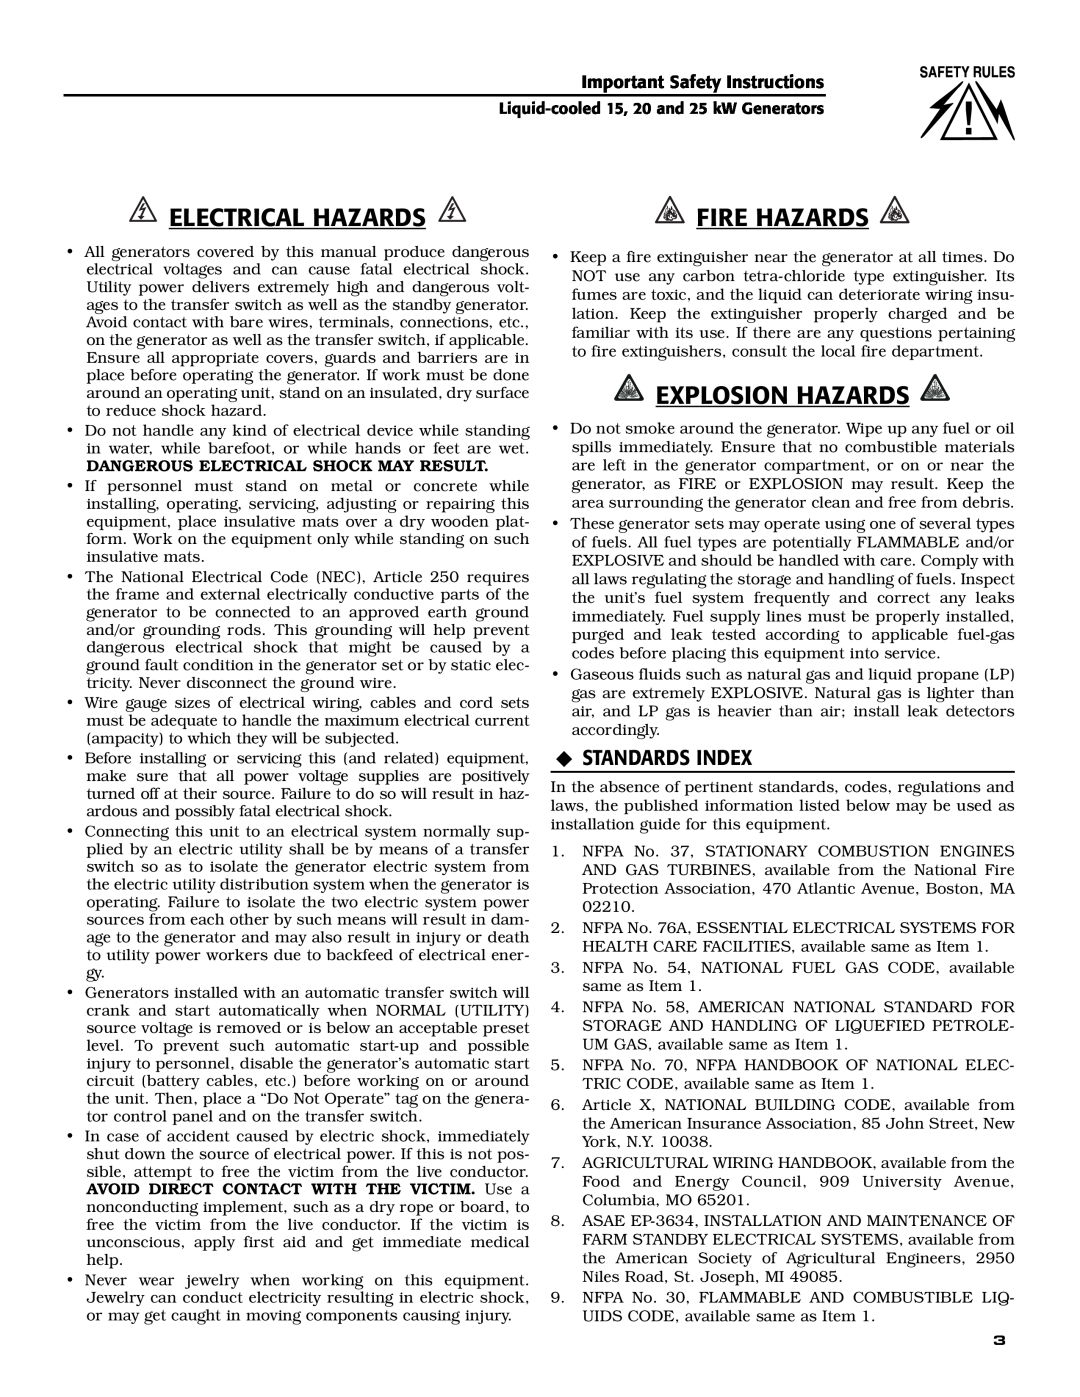 Generac 005030-0, 005028-0, 005031-0 owner manual Electrical Hazards, Fire Hazards, Explosion Hazards, ‹ Standards Index 